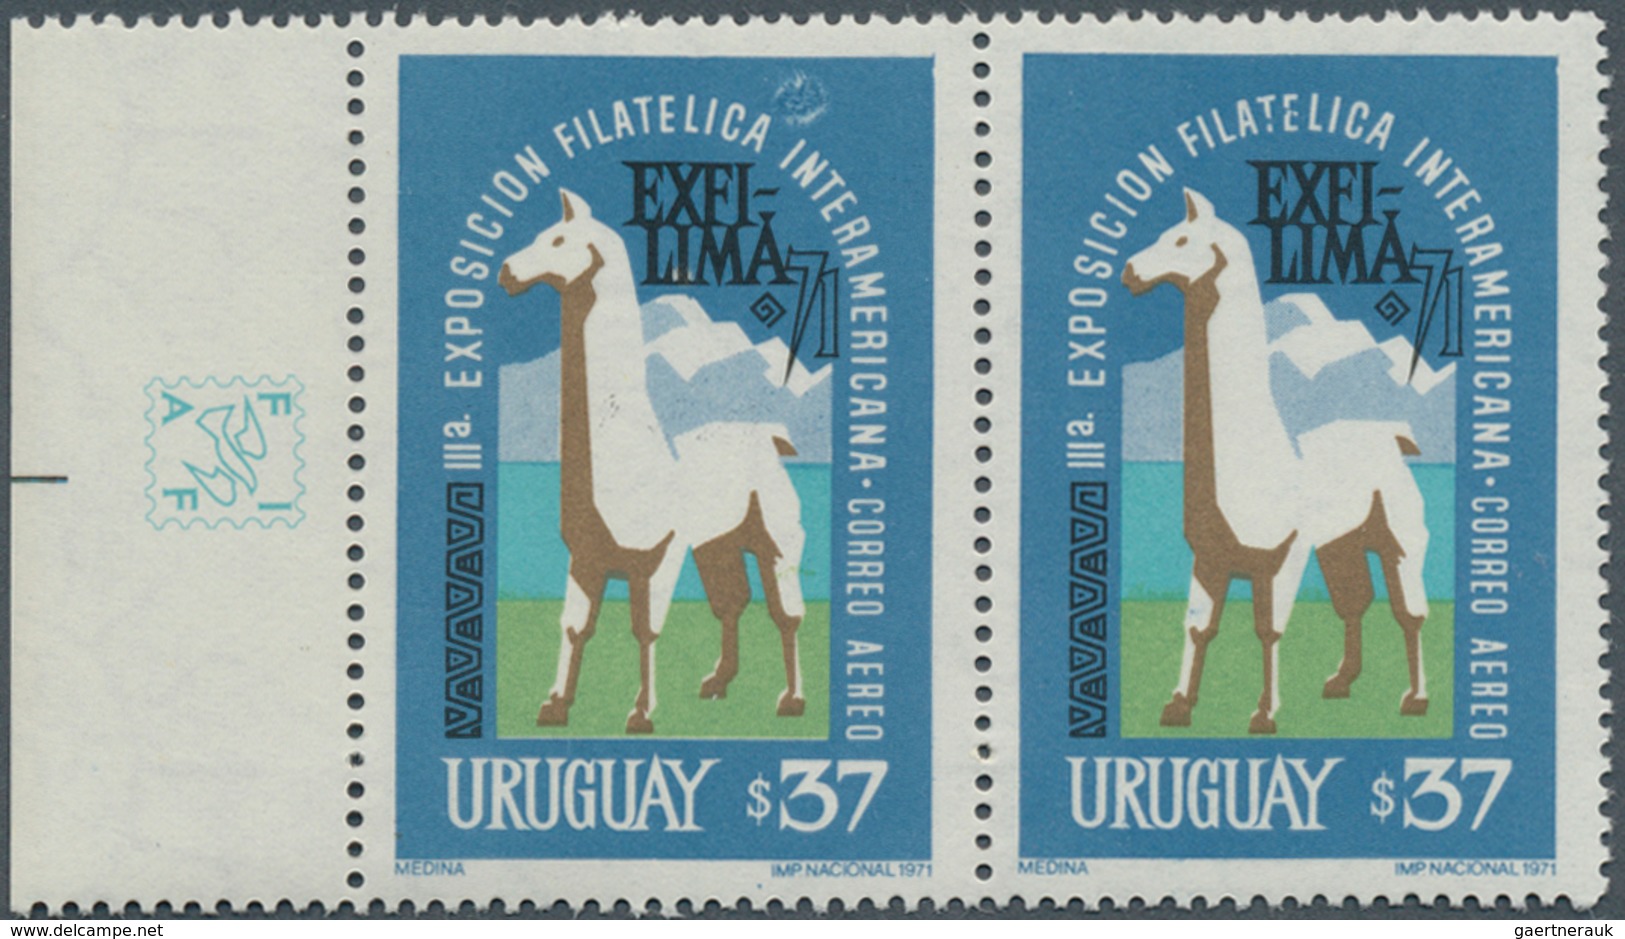 Südamerika: 1933/1975. South America Lot with ECUADOR Sc #319/2,100copies; PARAGUAY Sc #C261/975 cop